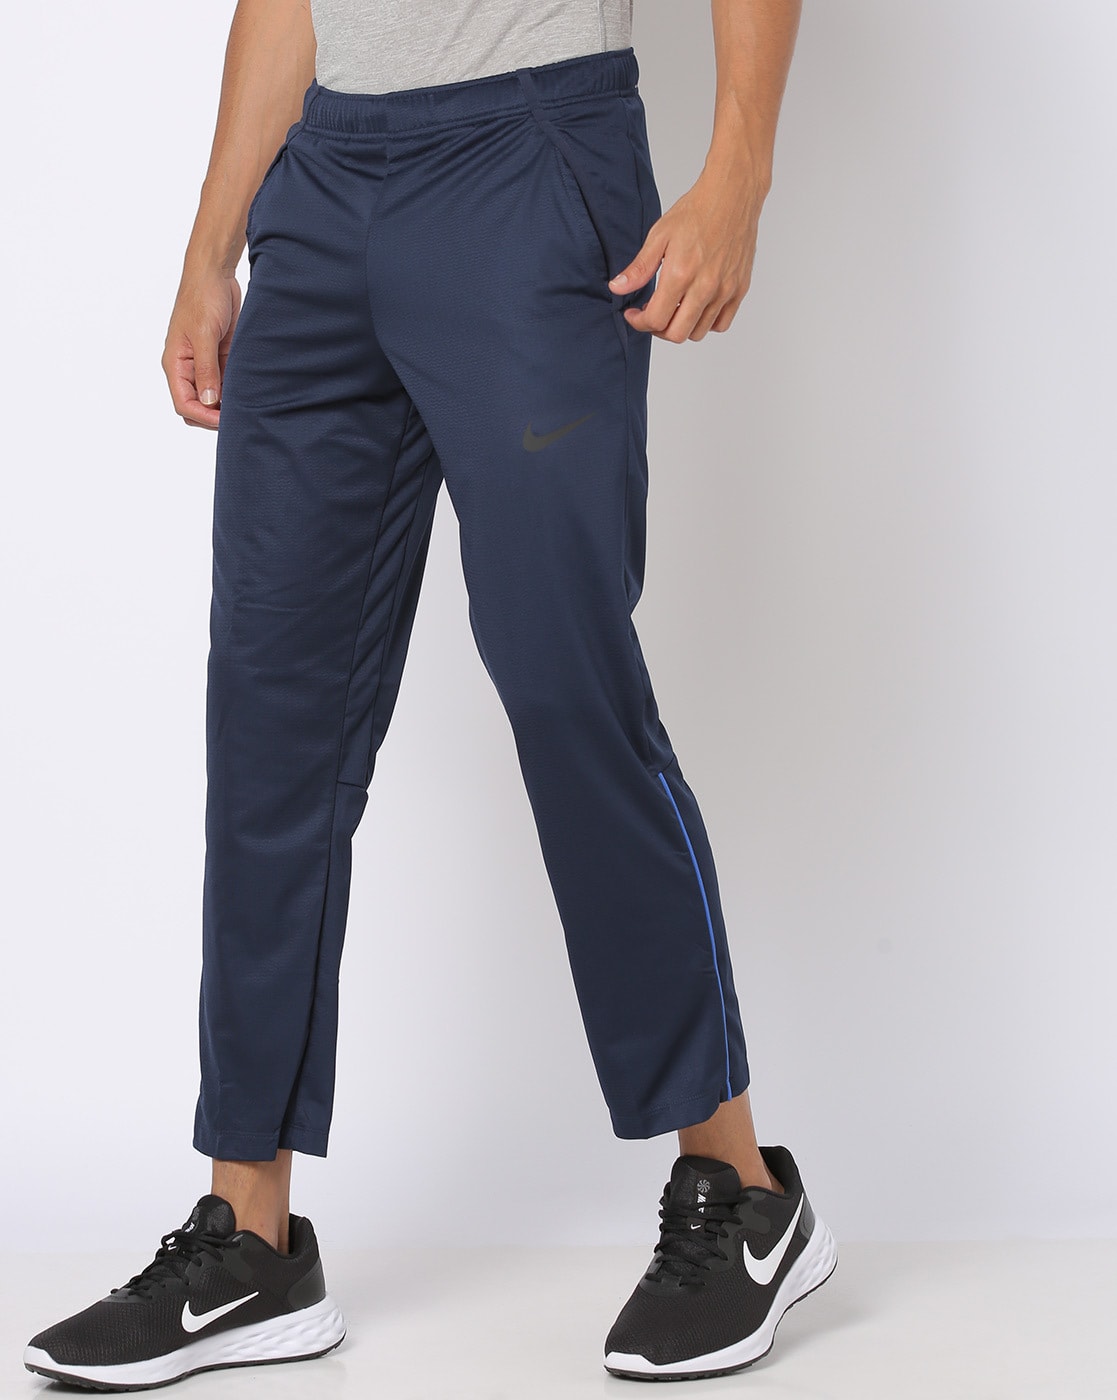 Cotton Navy Blue Track Pant Size S  XL